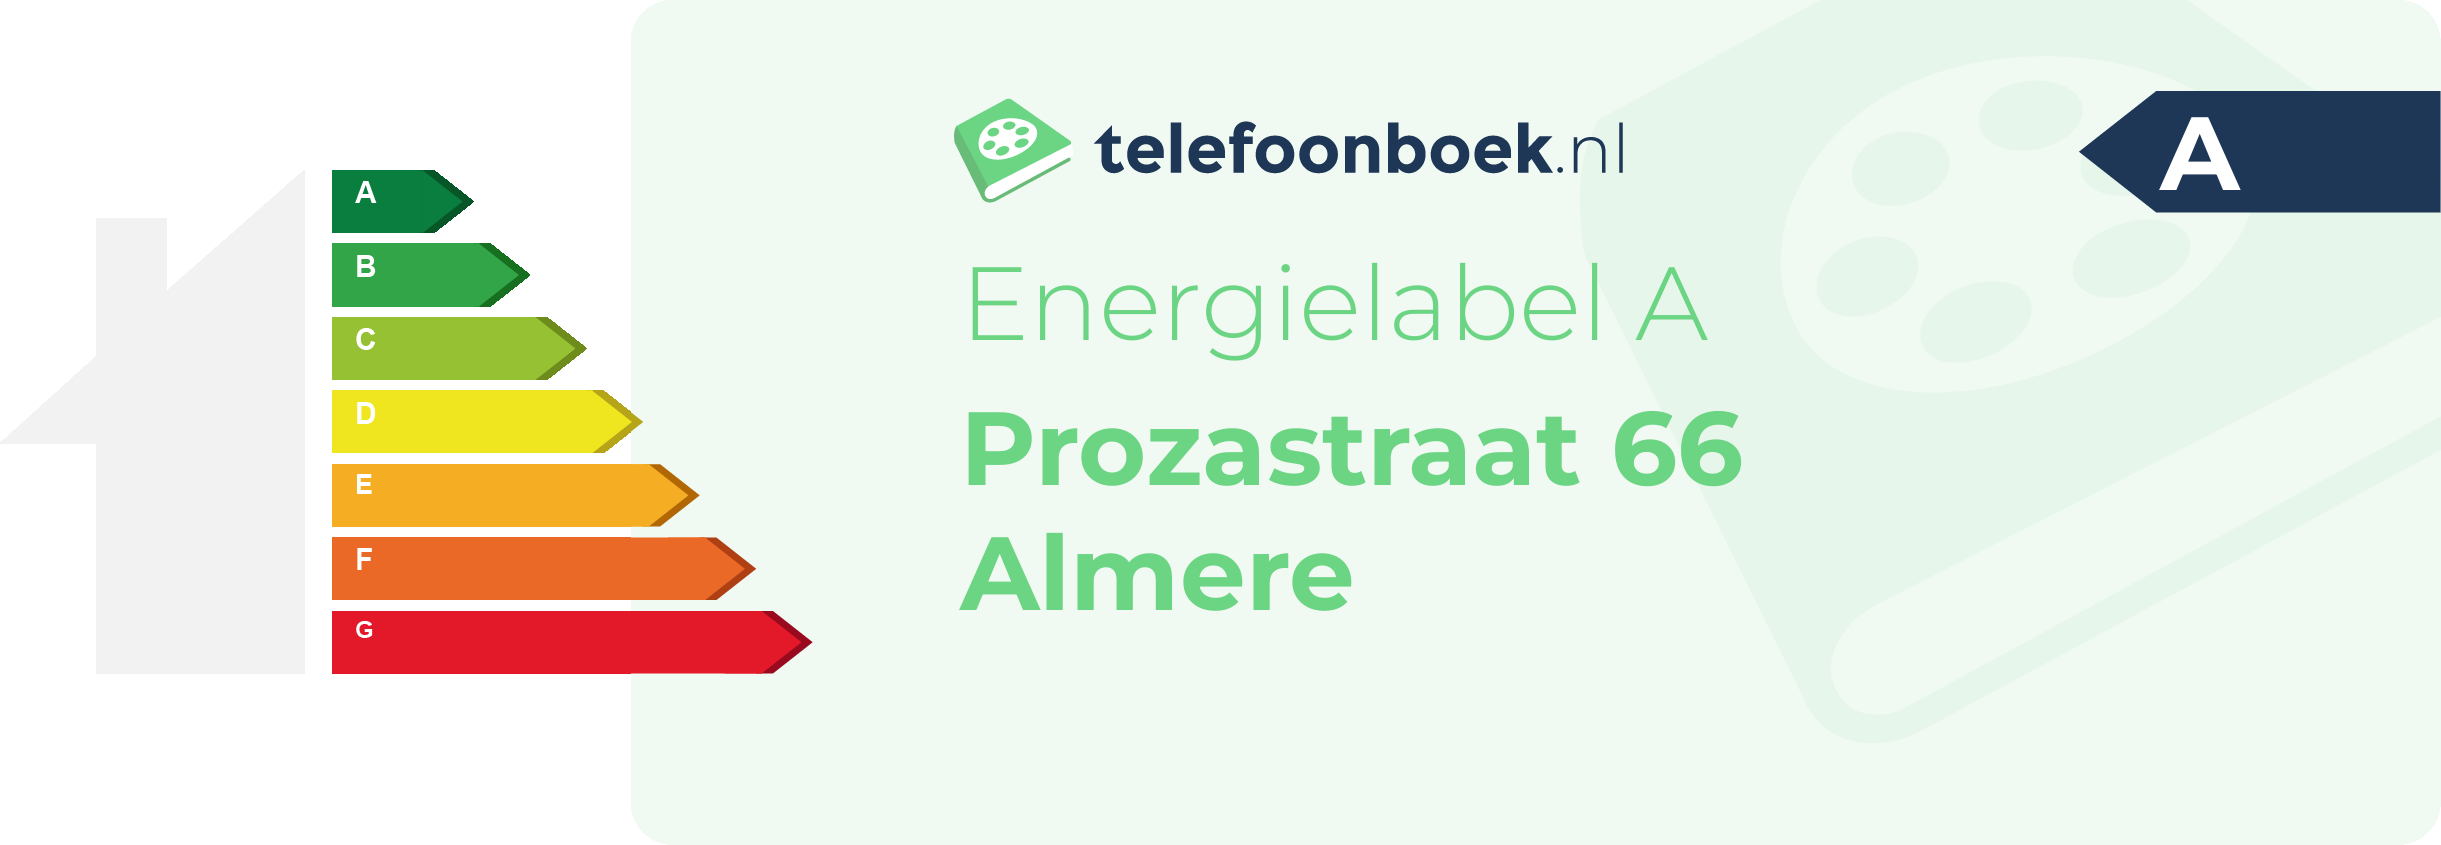 Energielabel Prozastraat 66 Almere